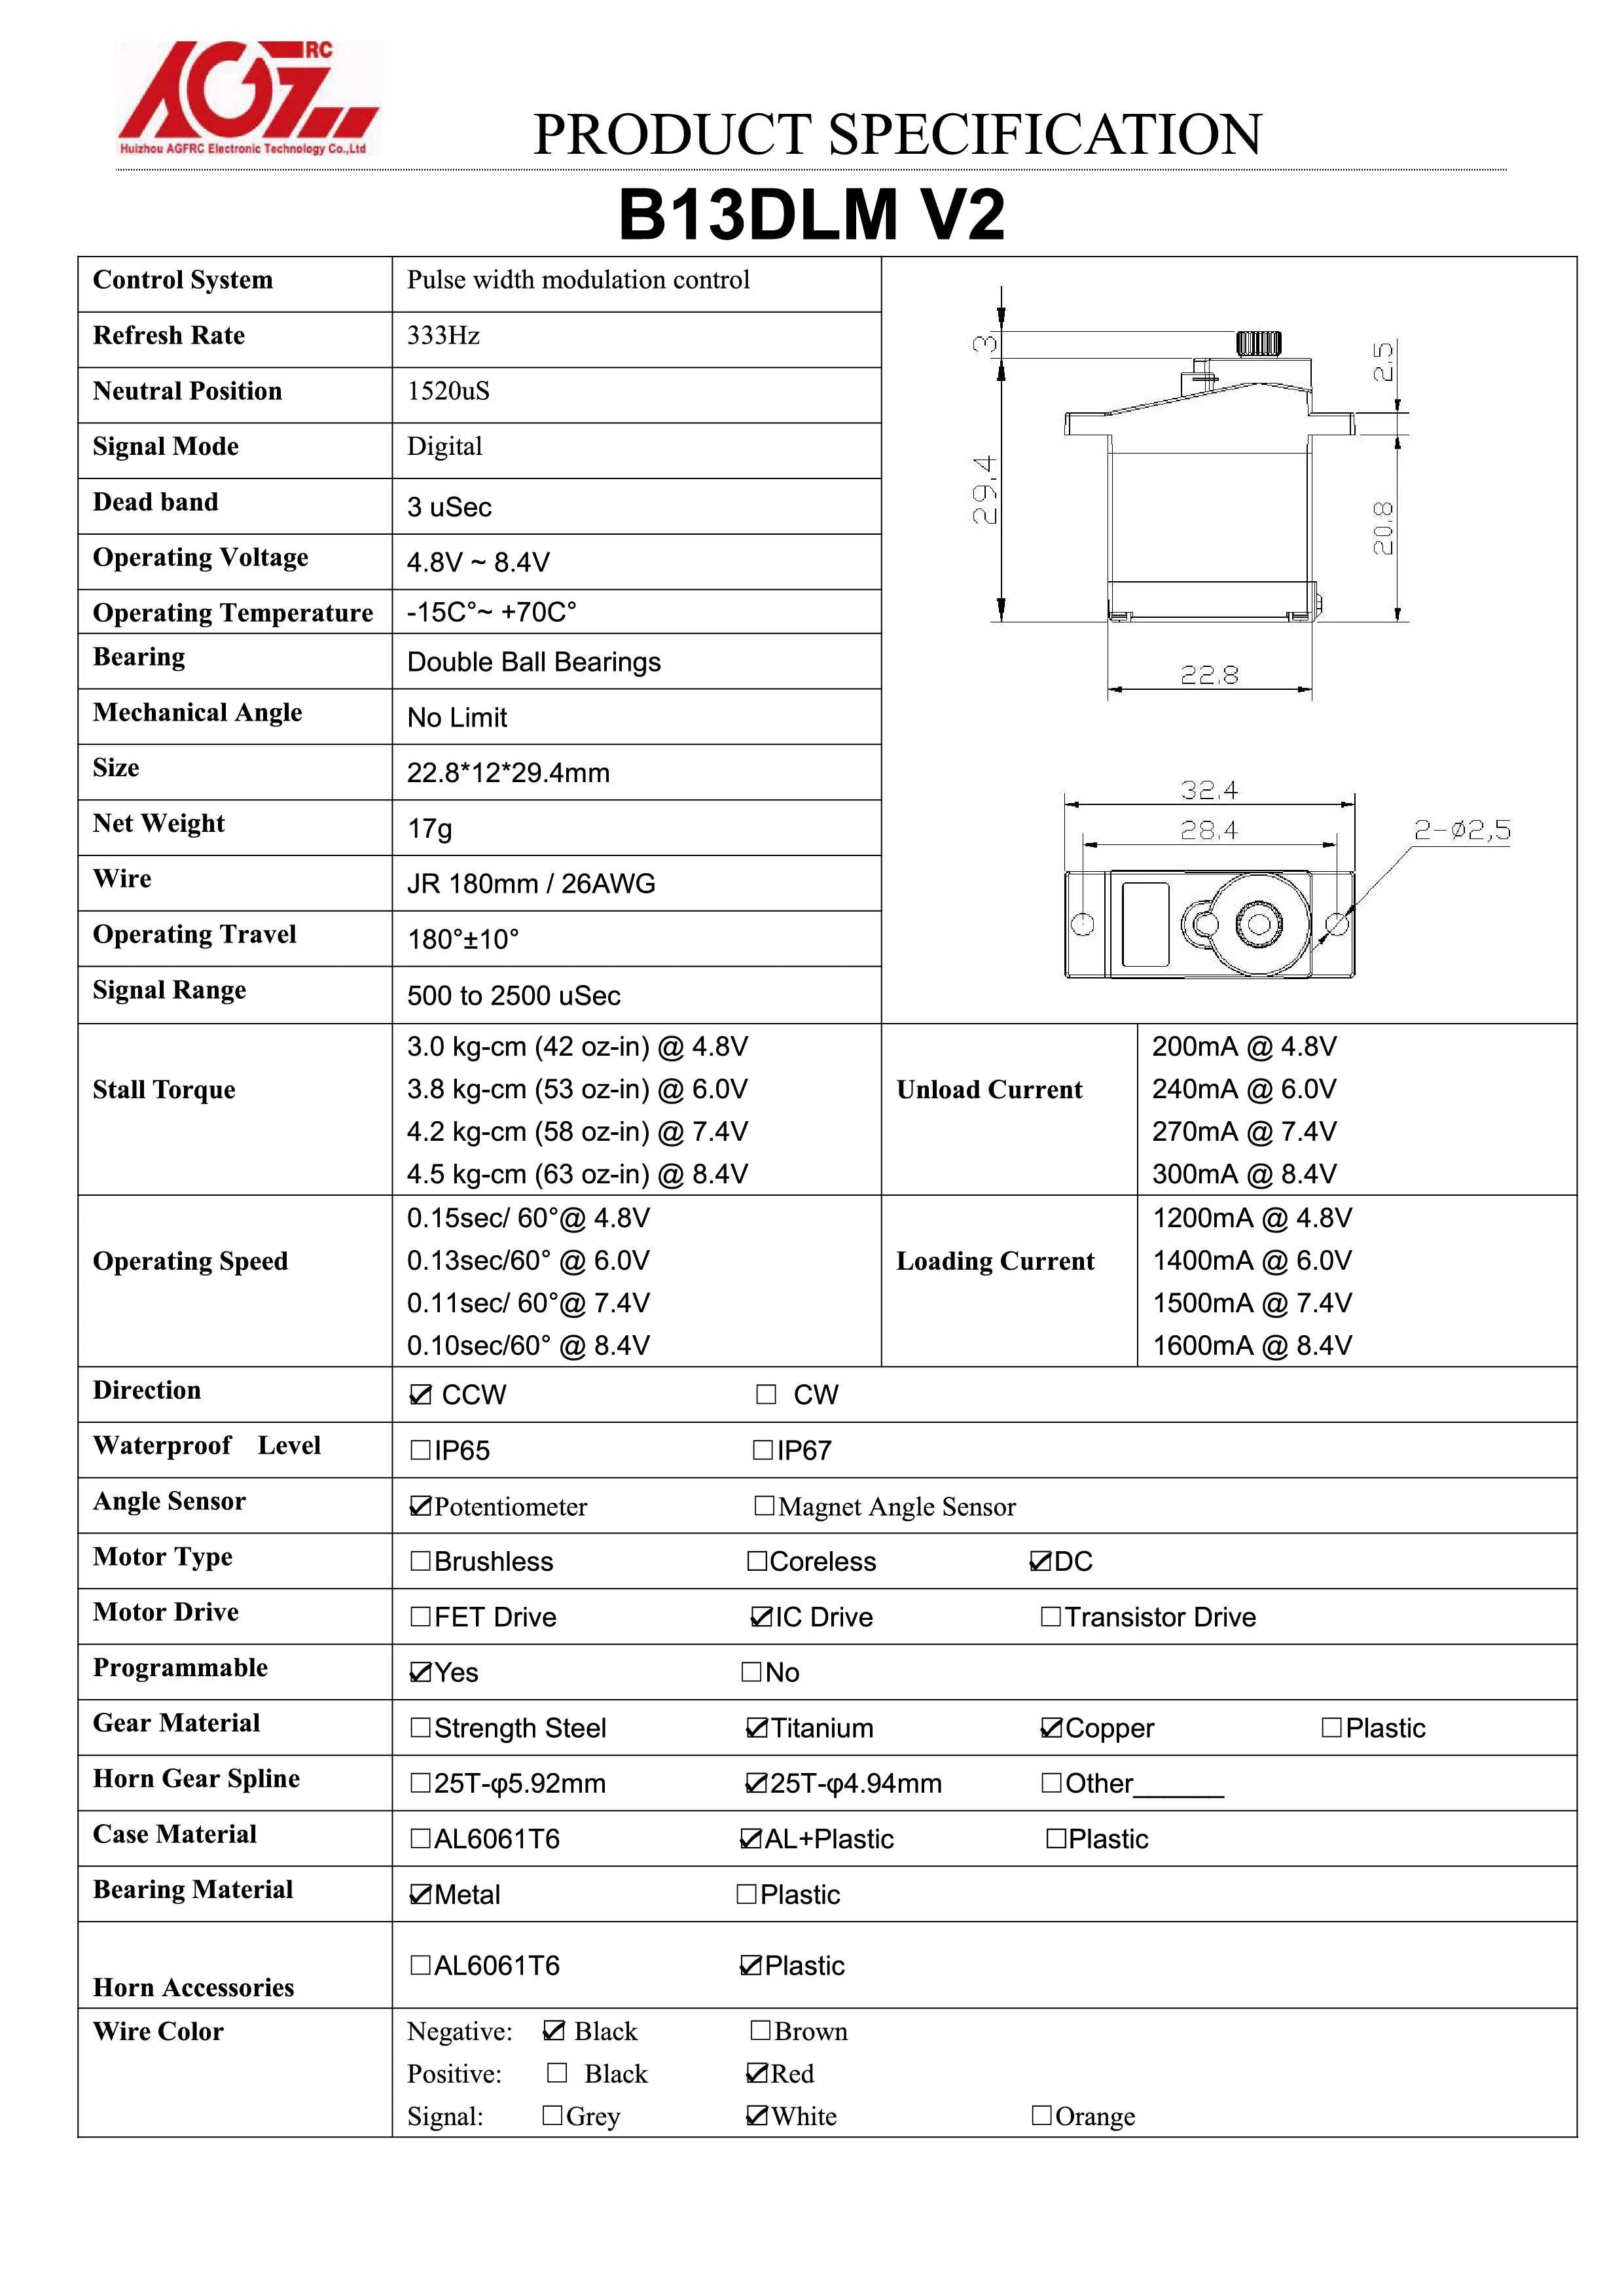 AGFRC B13DLM V2, KO AGFRC Elactronic Technology Co_Ltd PRODUCT 